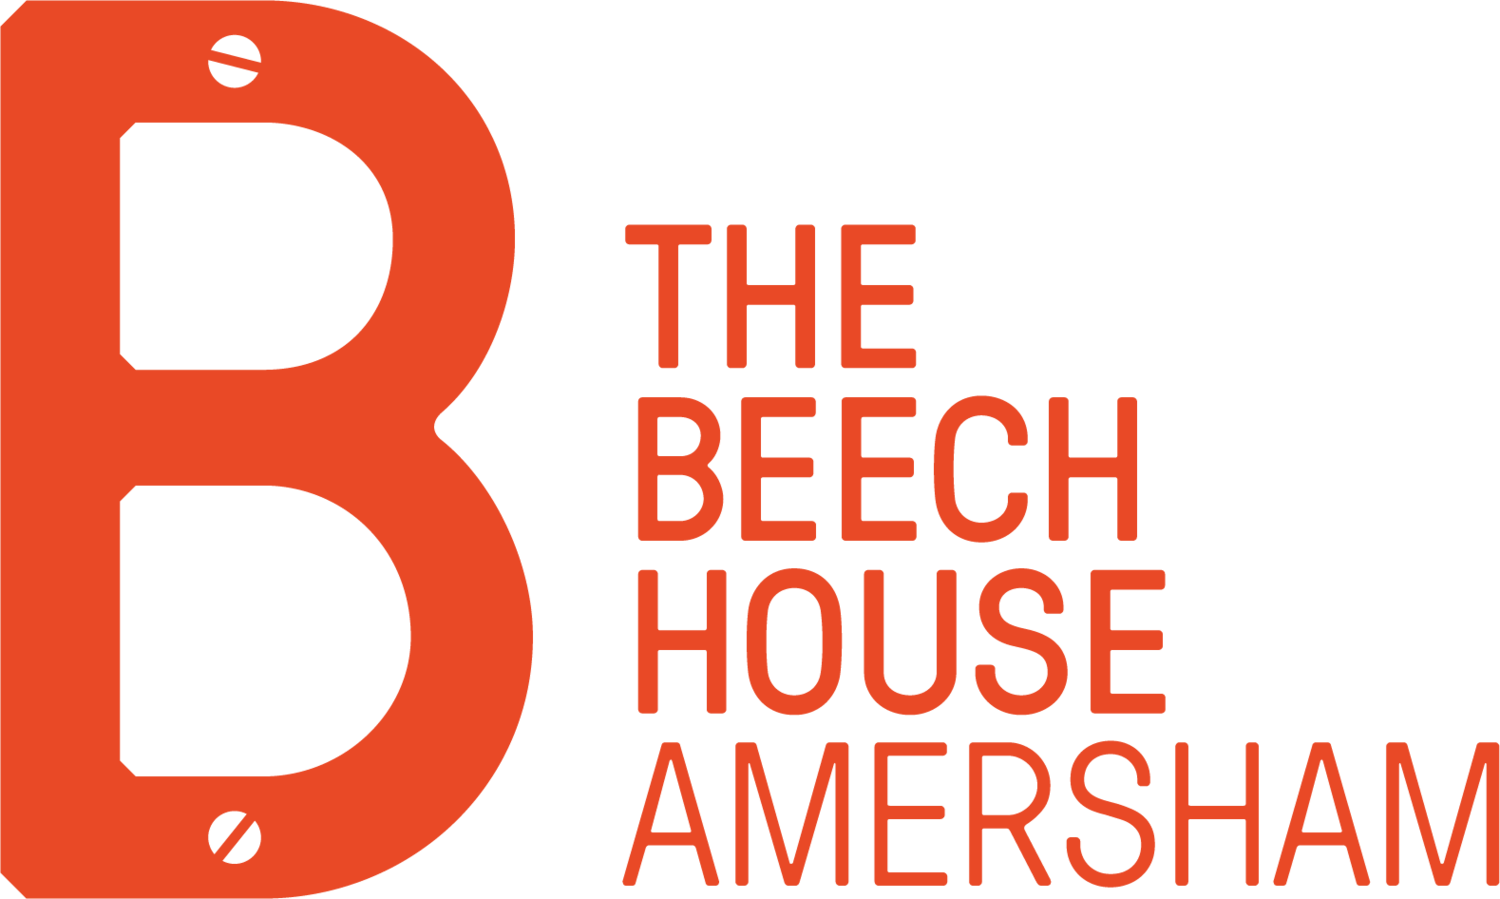 Beech House Amersham